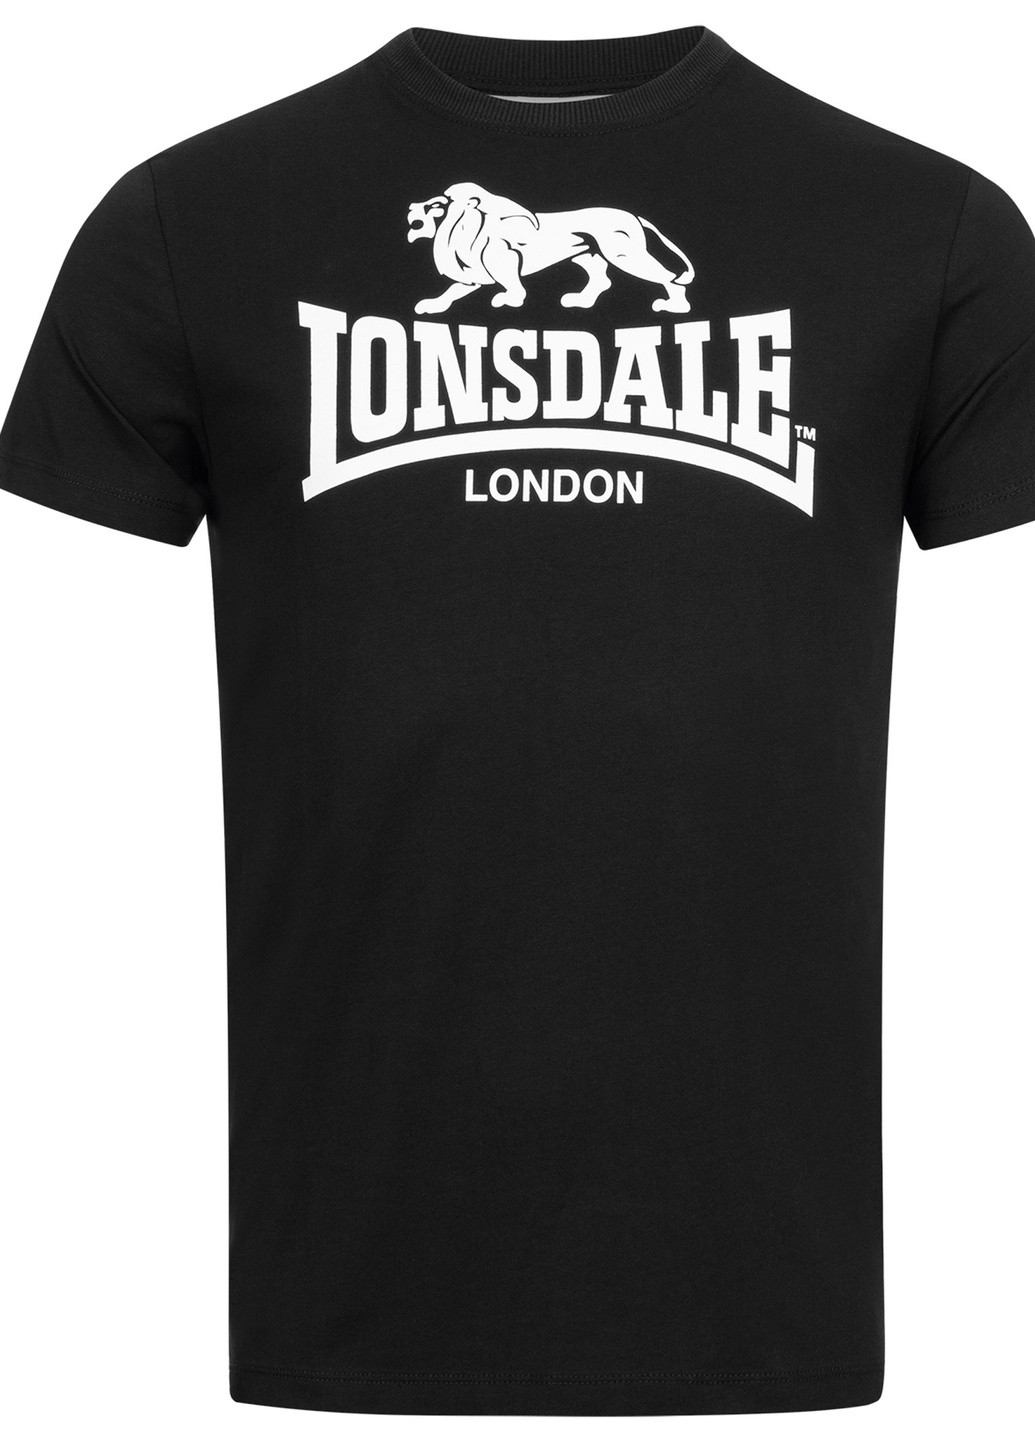 Черная футболка Lonsdale ST. ERNEY